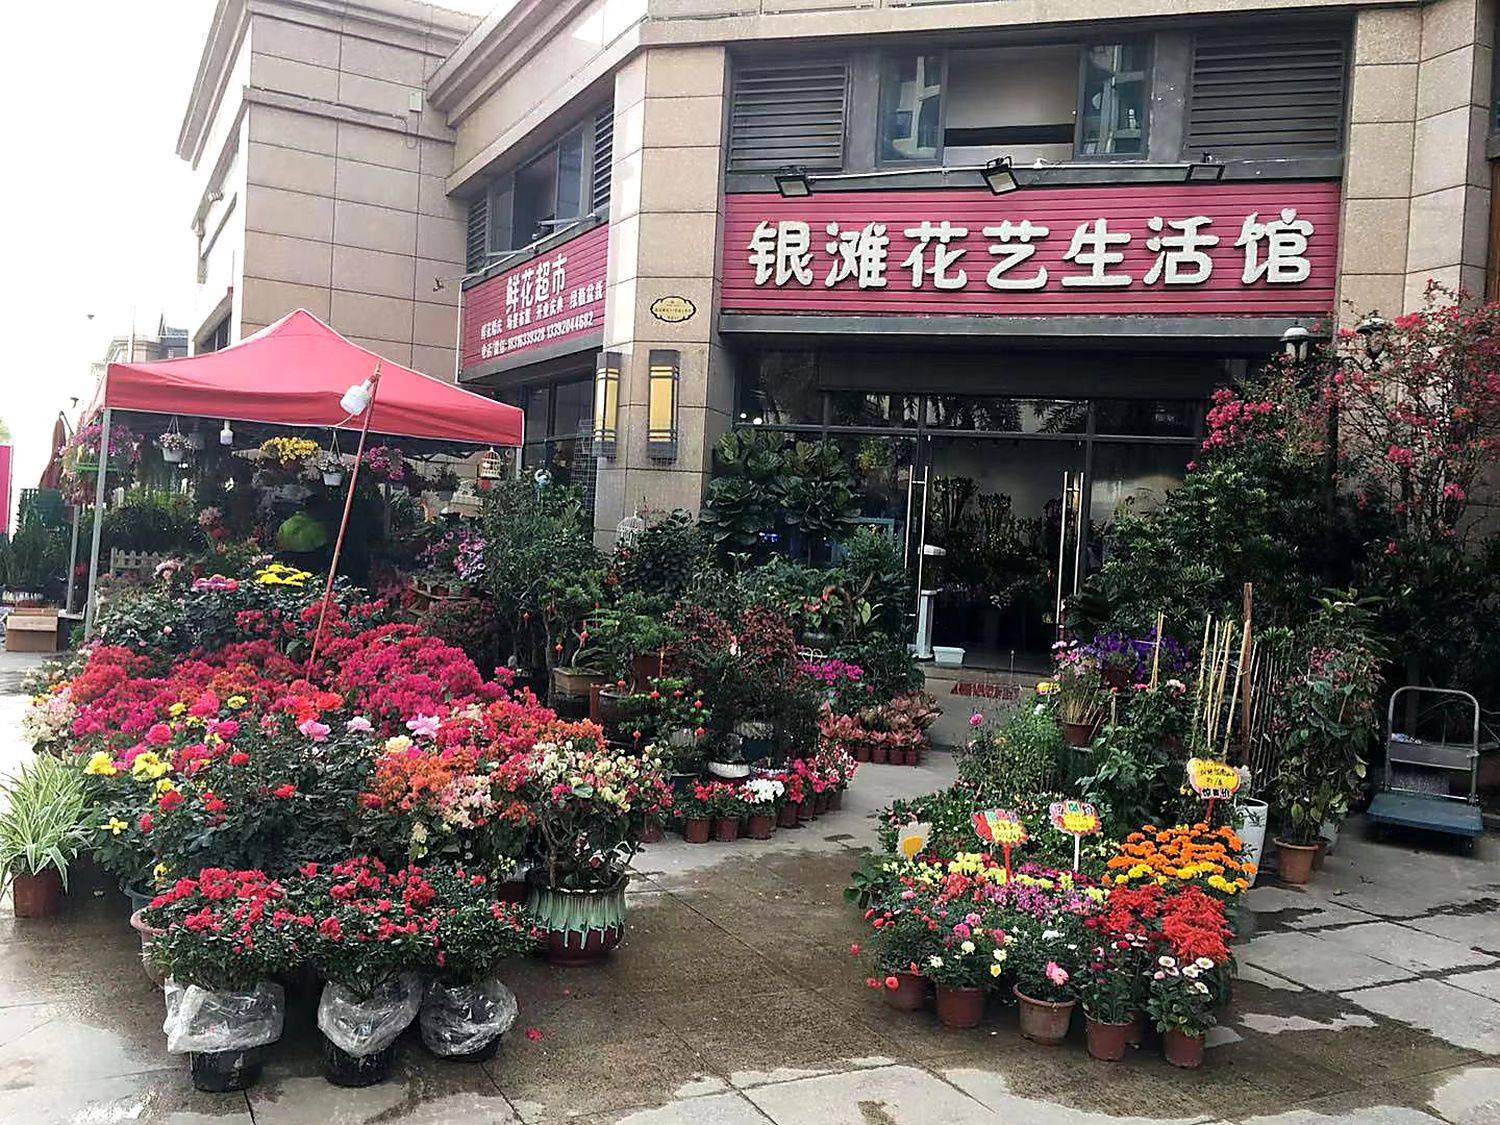 Flower shop next to the house, Huizhou, South China